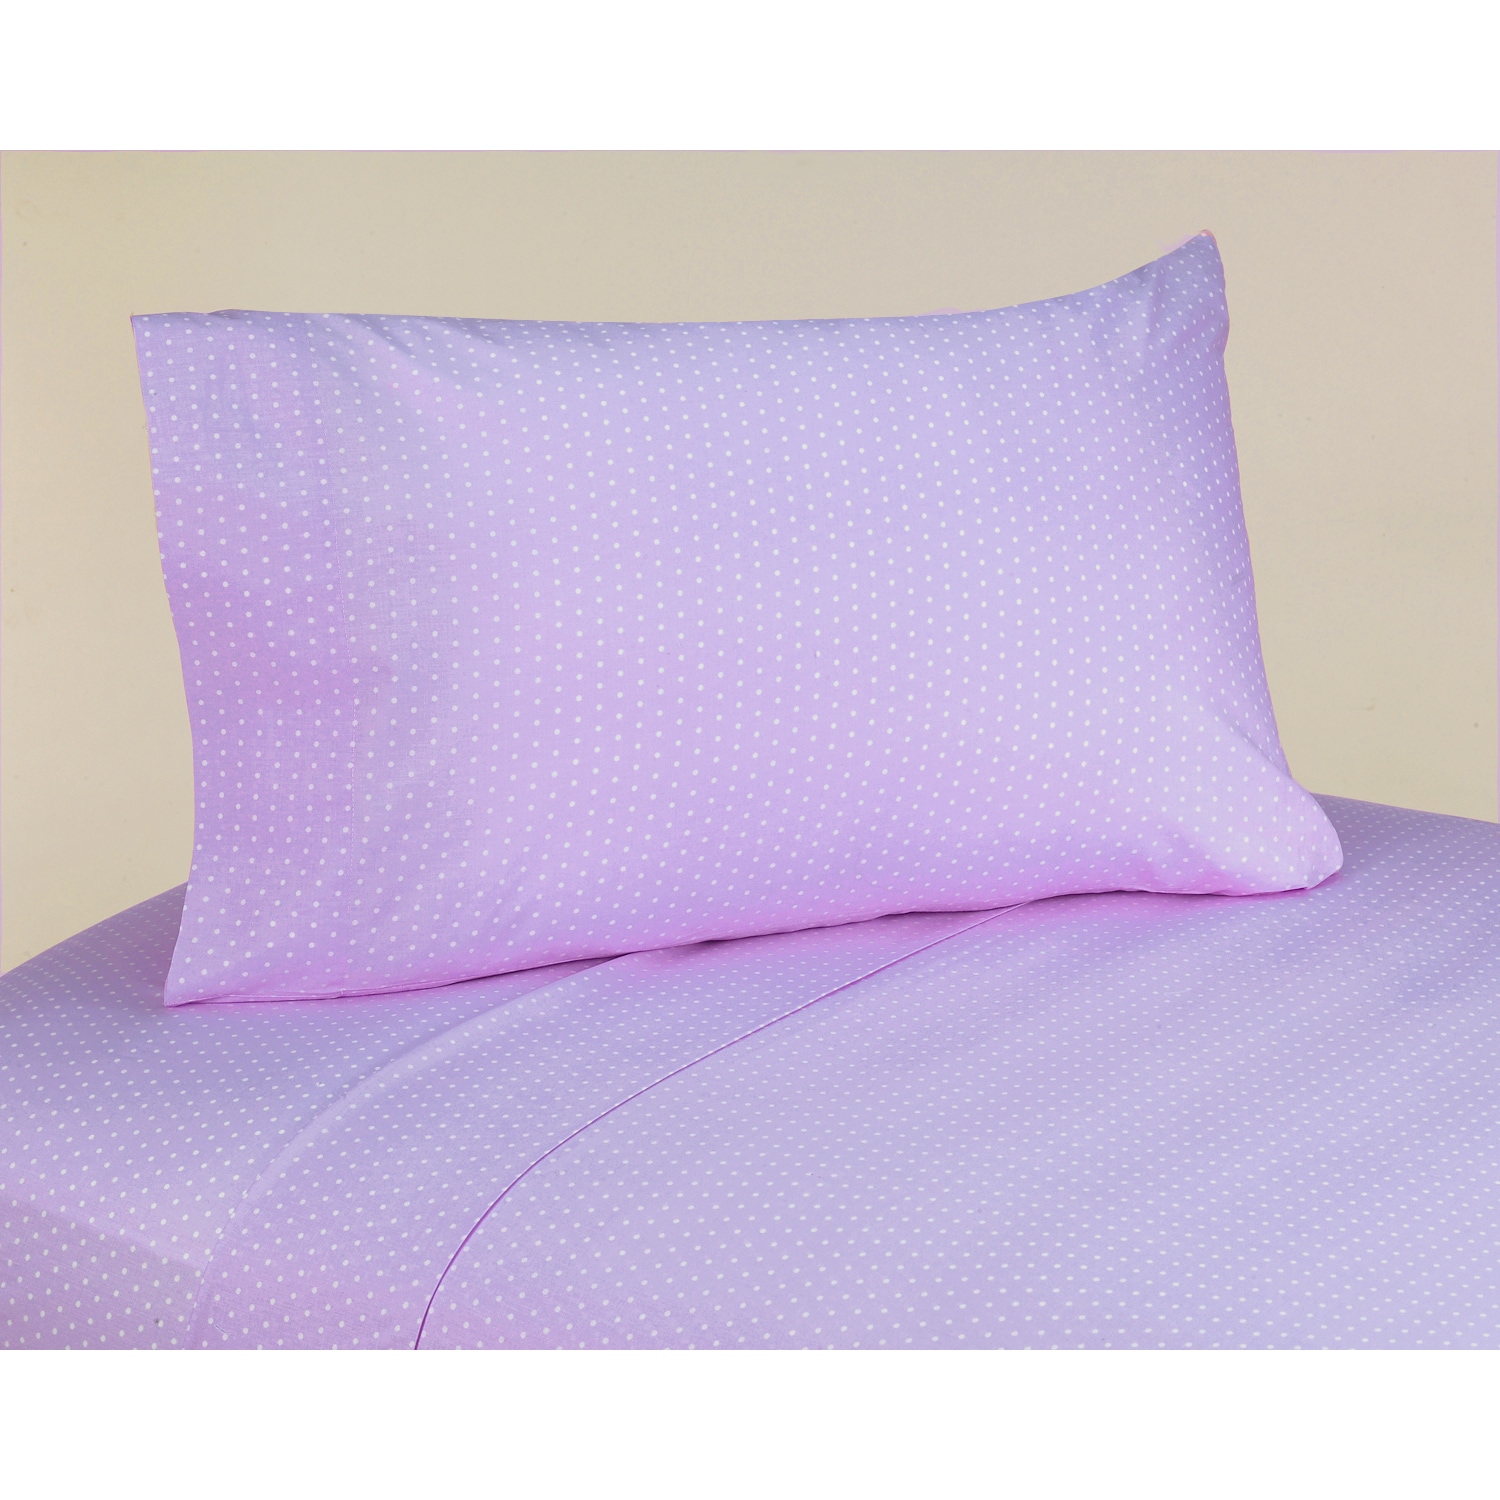 Sweet Jojo Designs 200 Thread Count Mod Dots Bedding Collection Purple Cotton Sheet Set